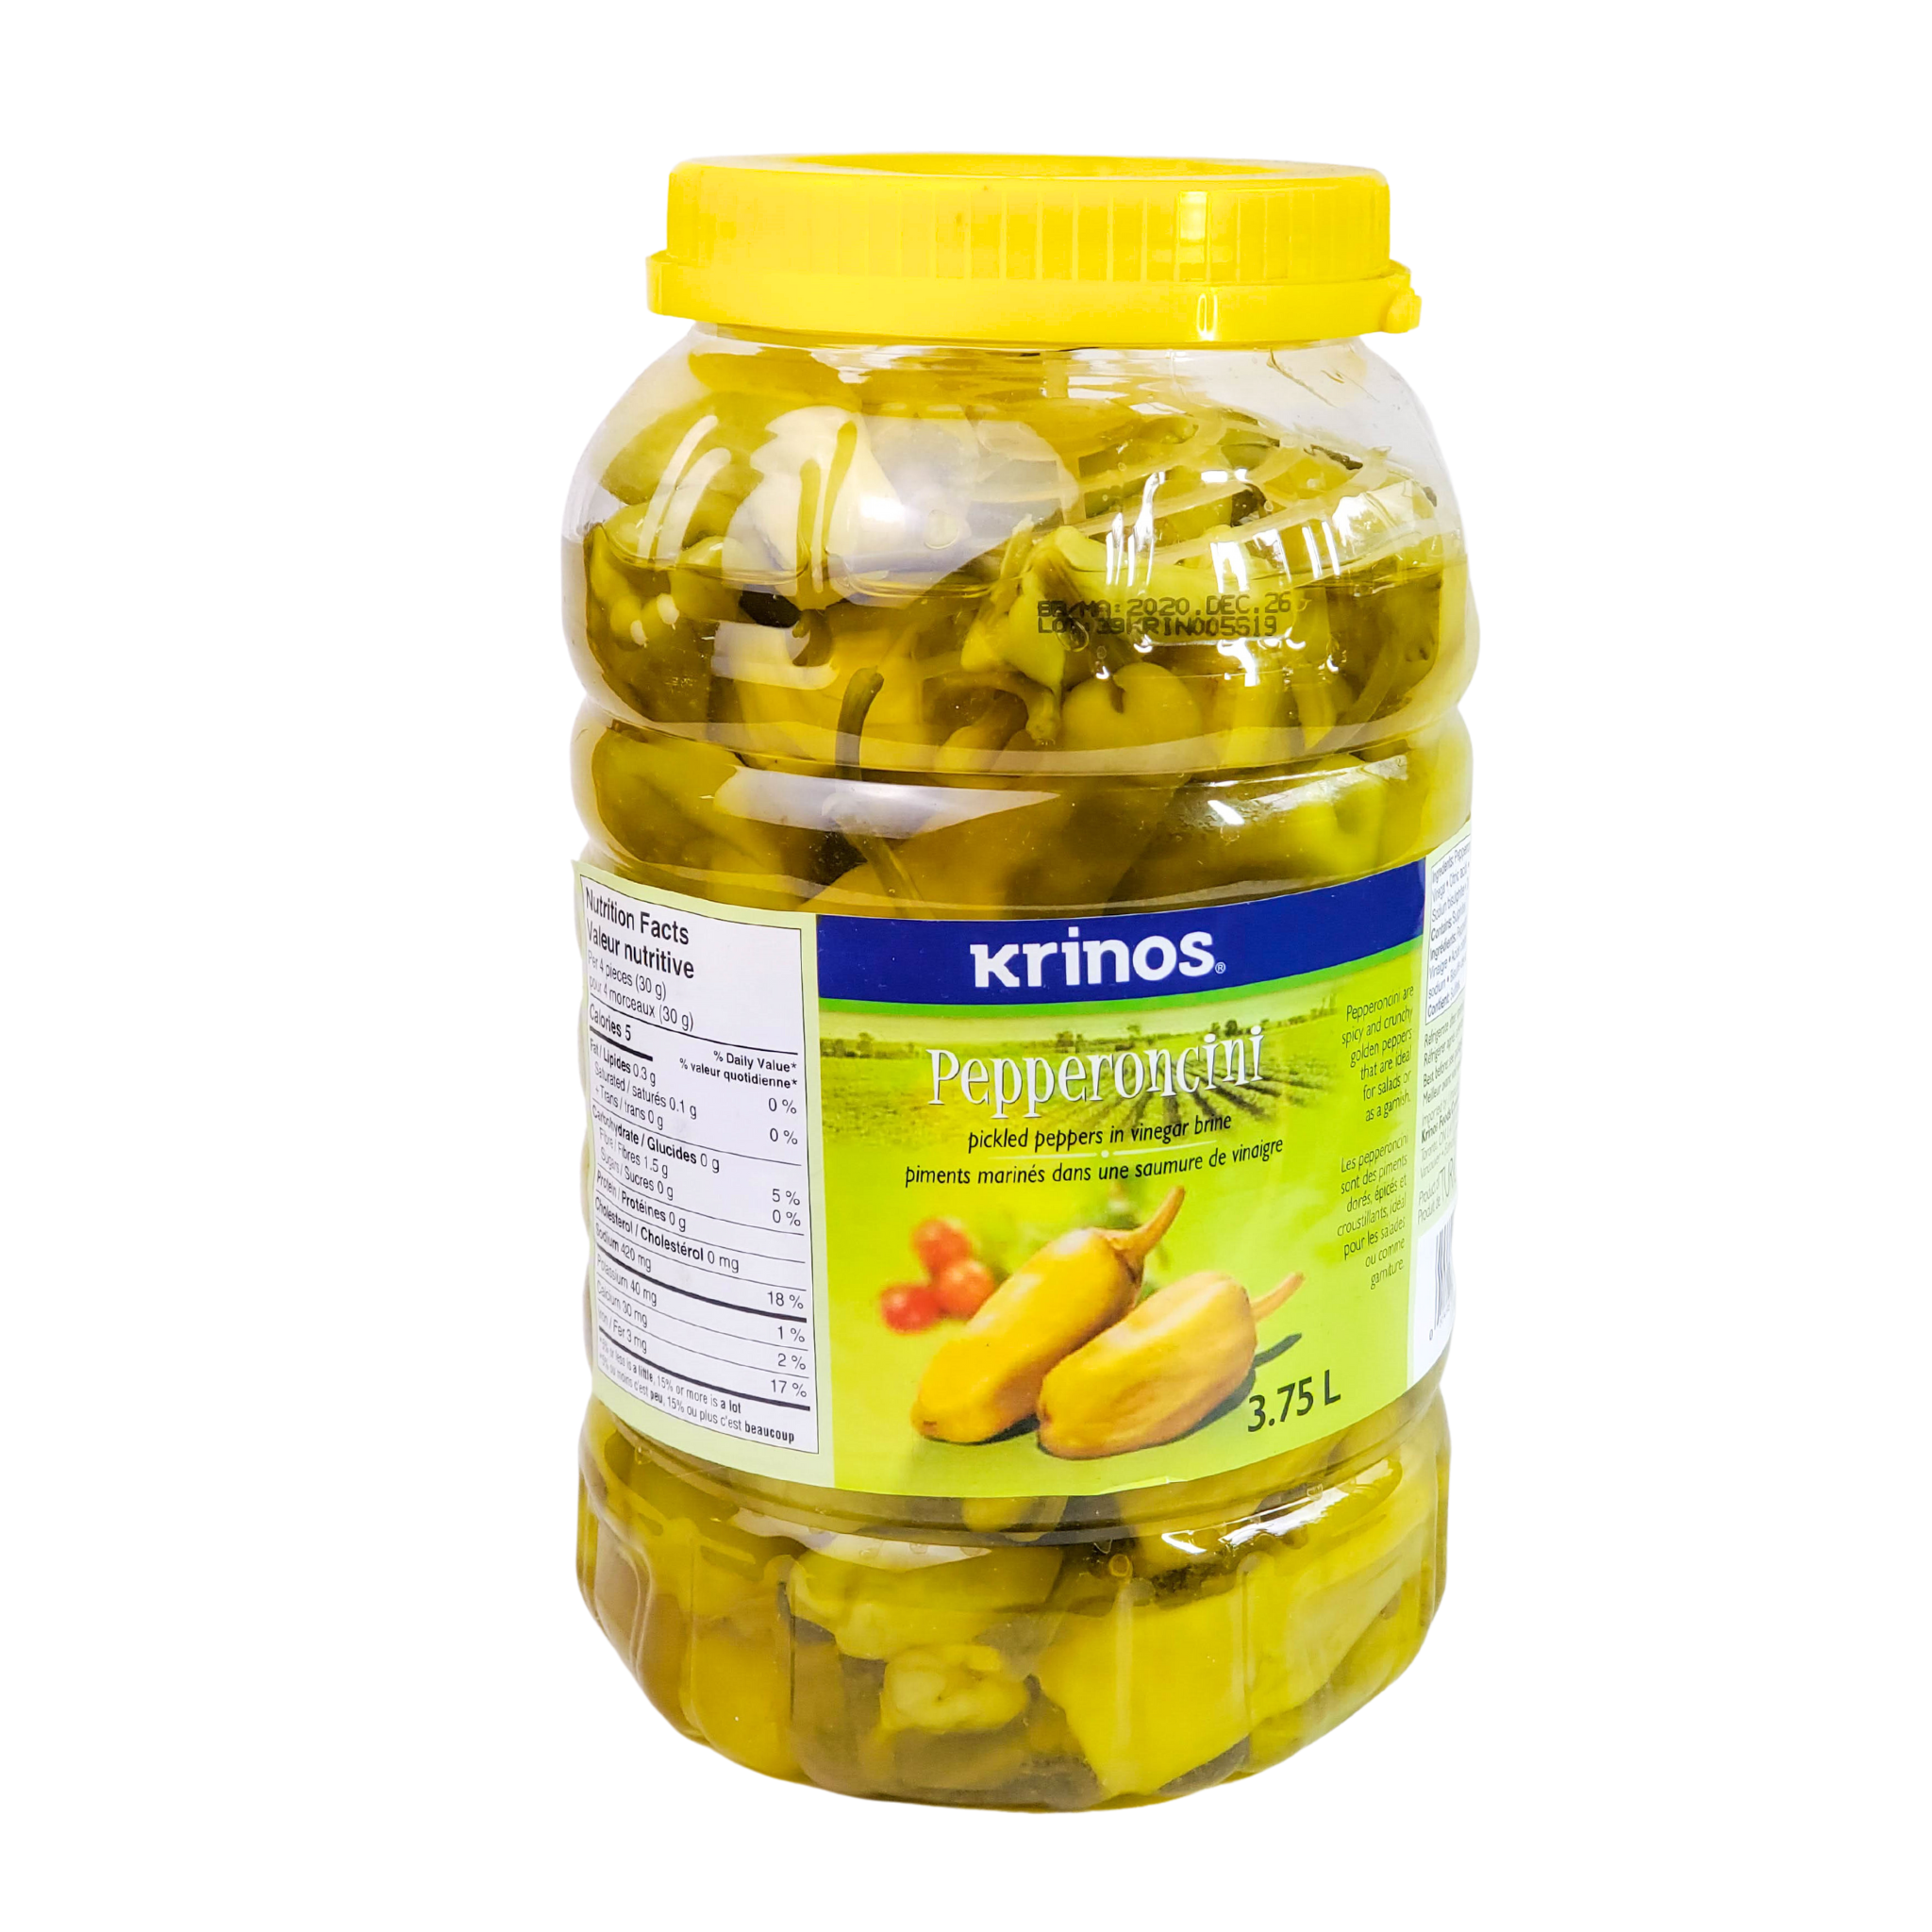 Krinos Pepperoncini  Pickled Peppers in Vinegar Brine 3.75L